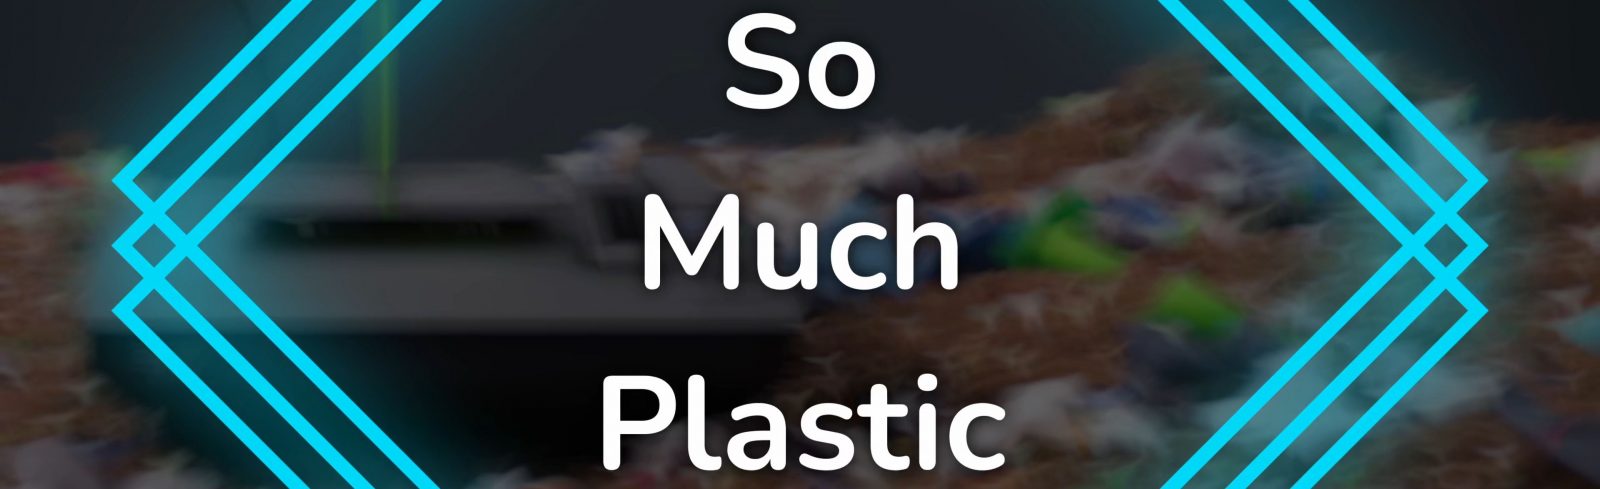 Headline: So much Plastic